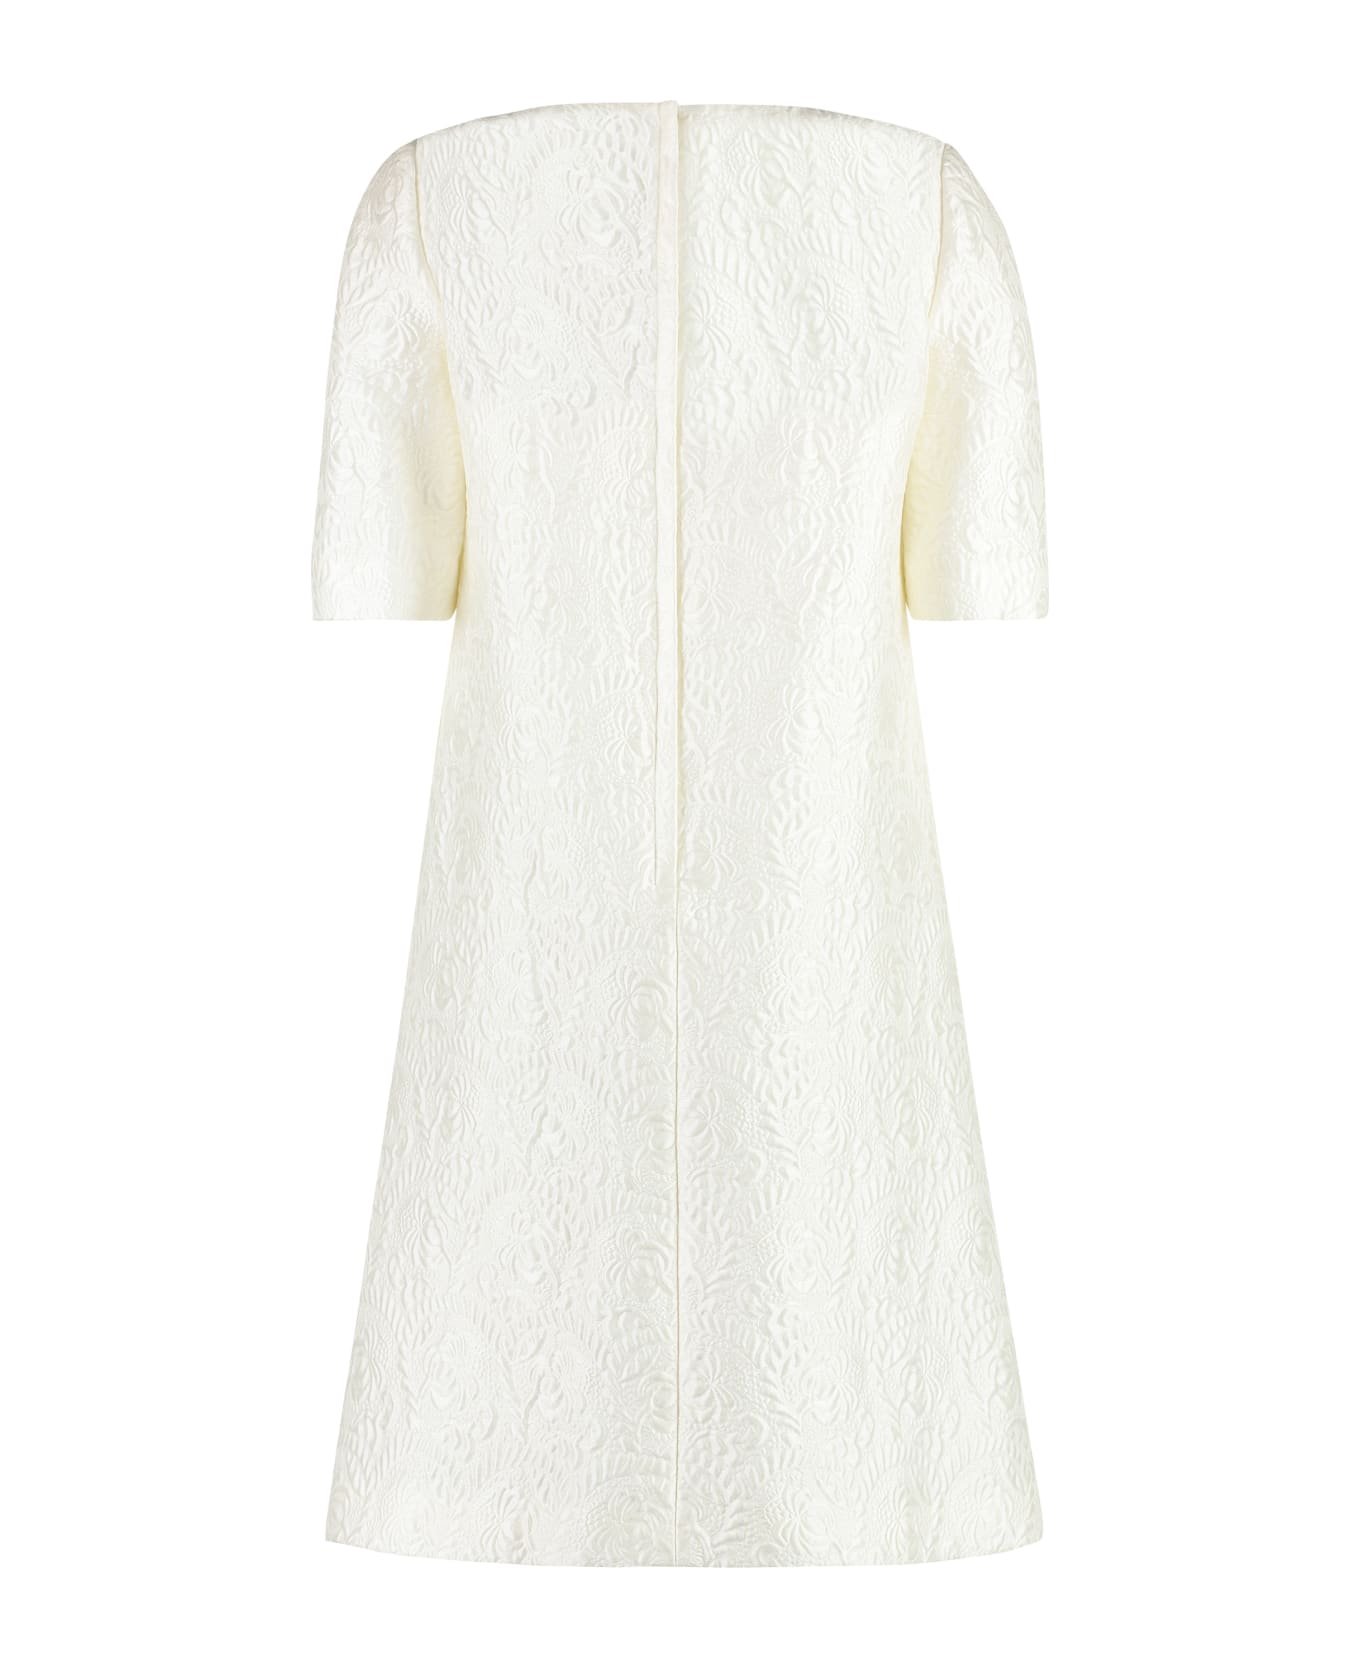 Dolce & Gabbana Floral Jacquard Fabric Dress - Ivory